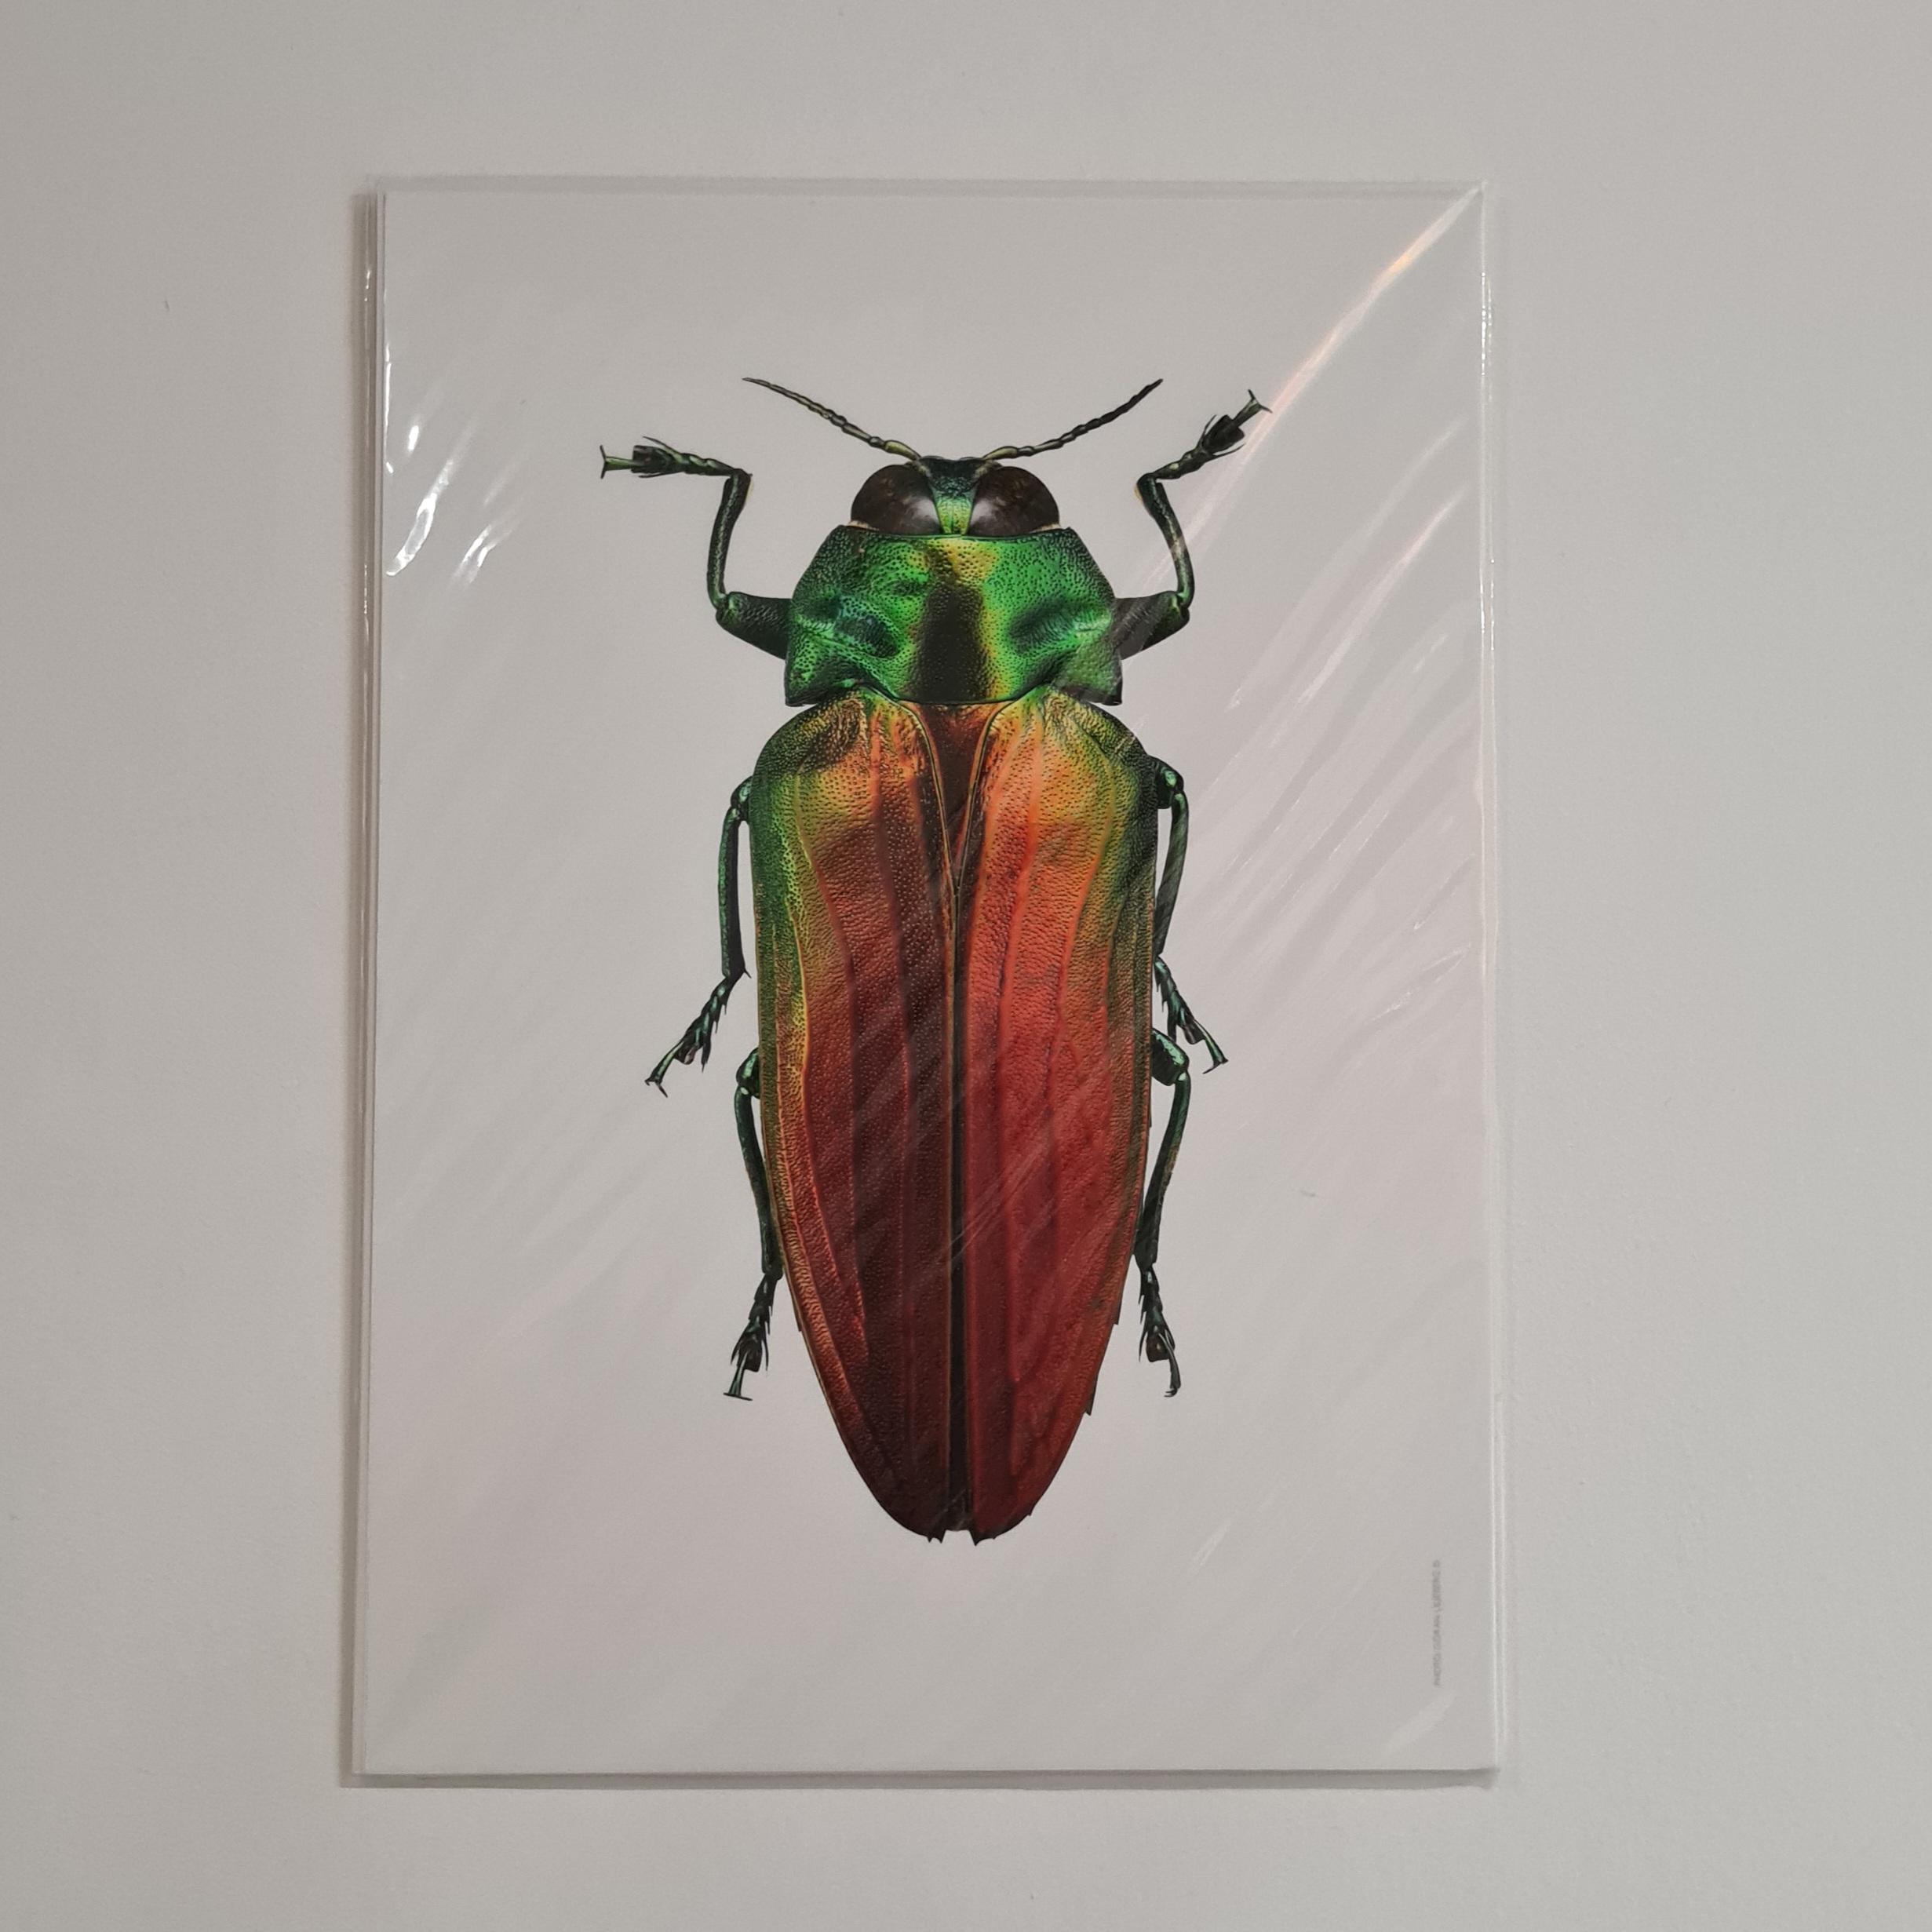 Liljebergs A4 Macro Photography Poster Green Copper Beetle